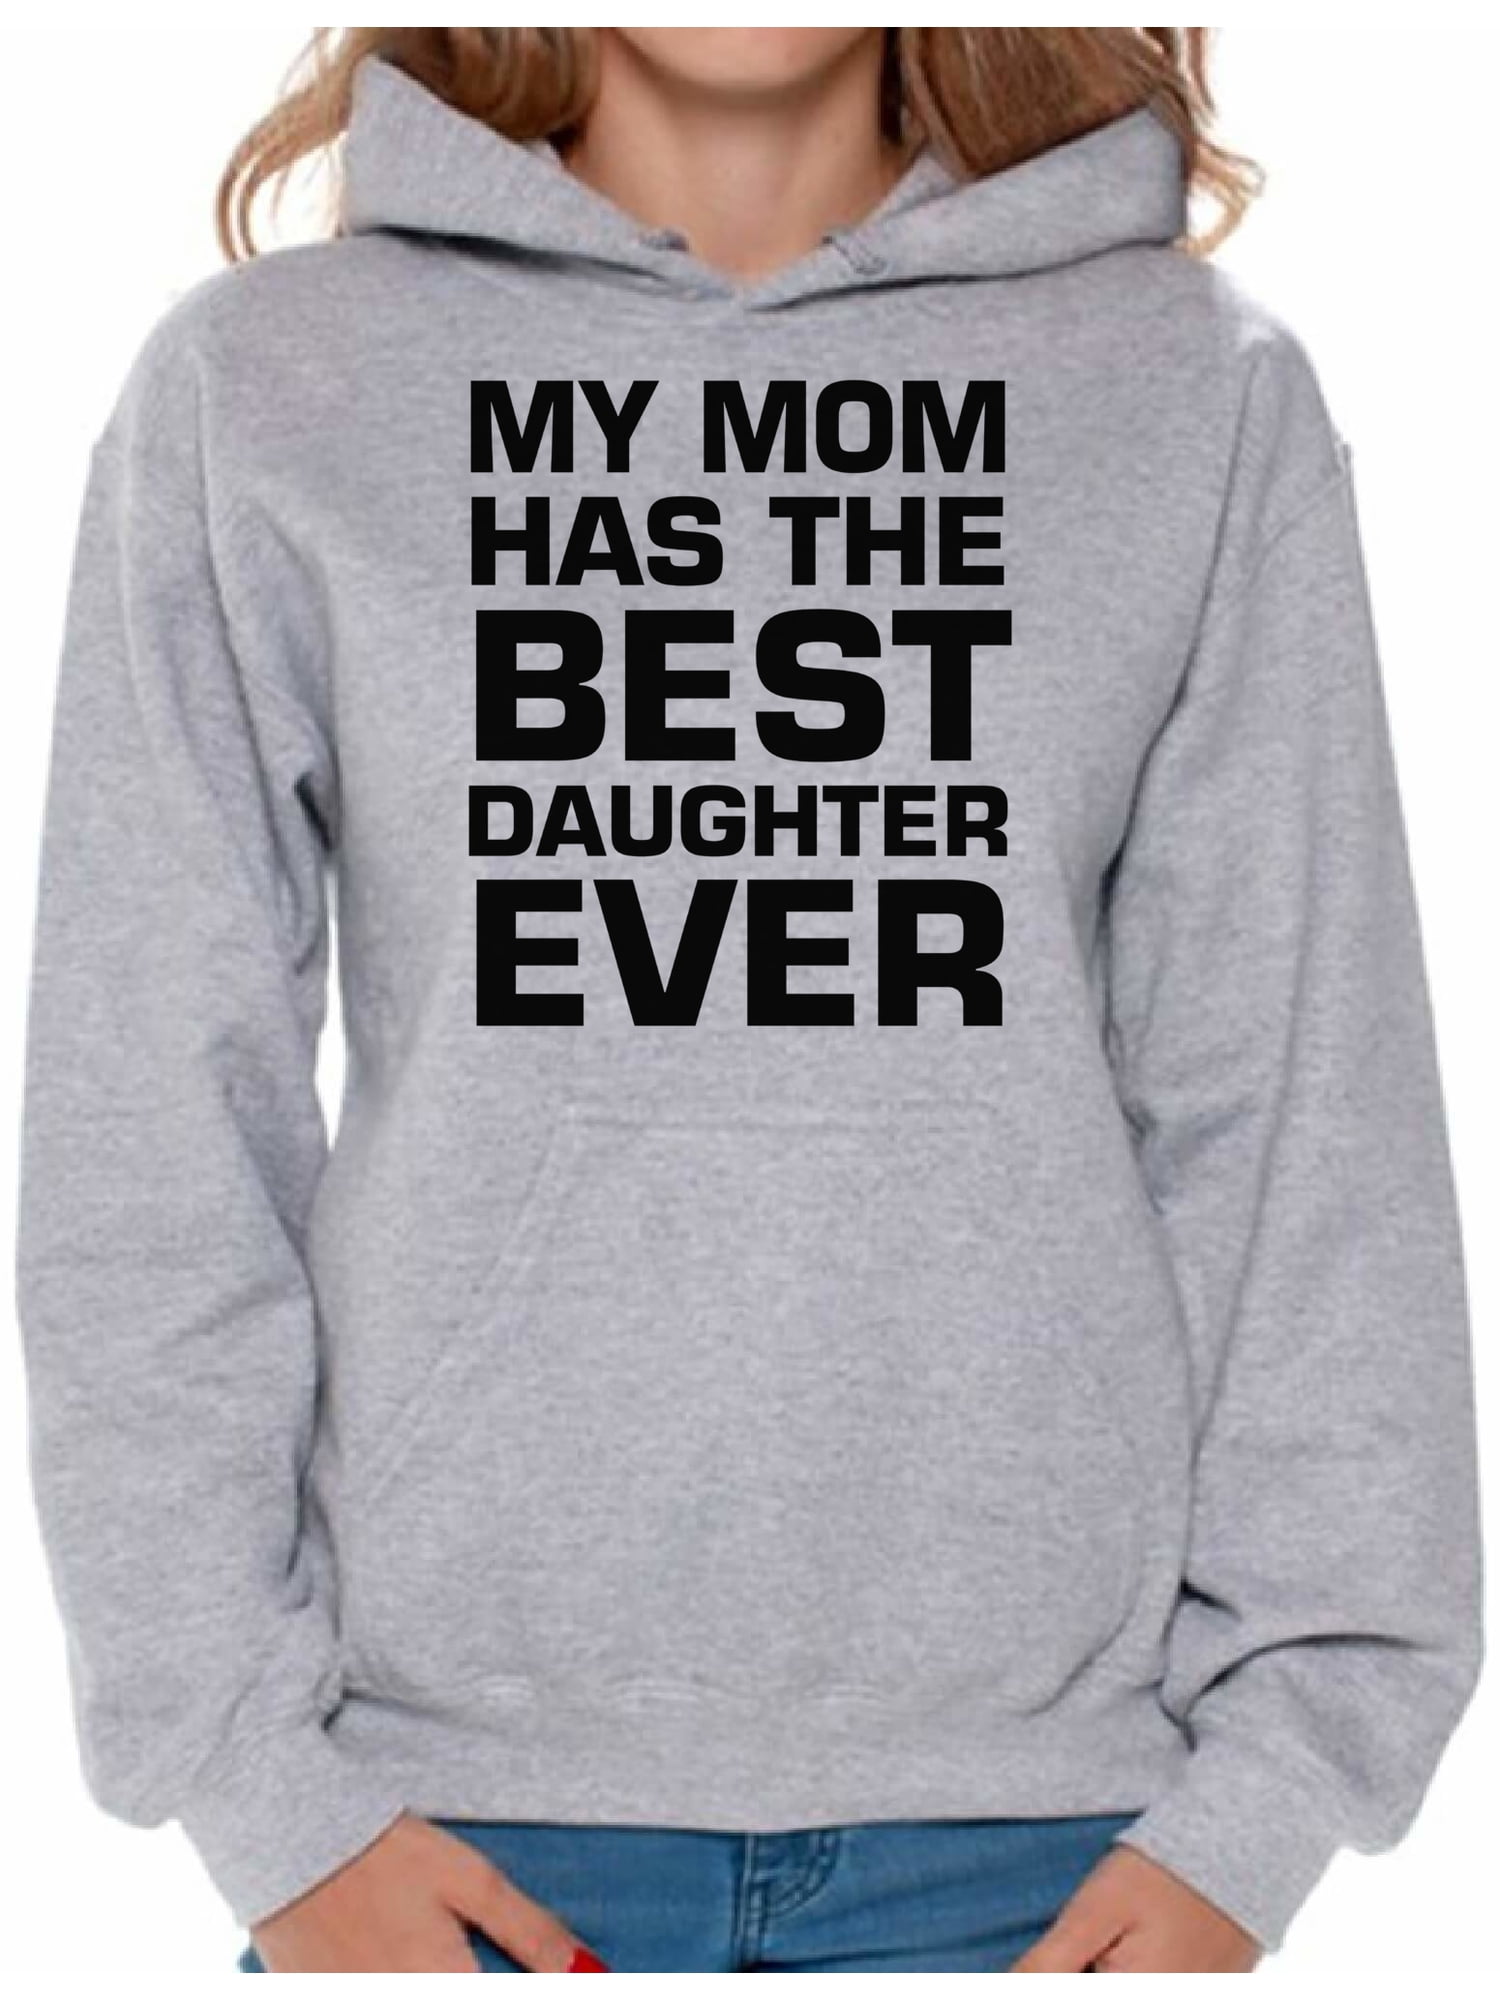 Awkward Styles Womens My Mom Has The Best Daughter Ever Graphic Sweatshirt Tops